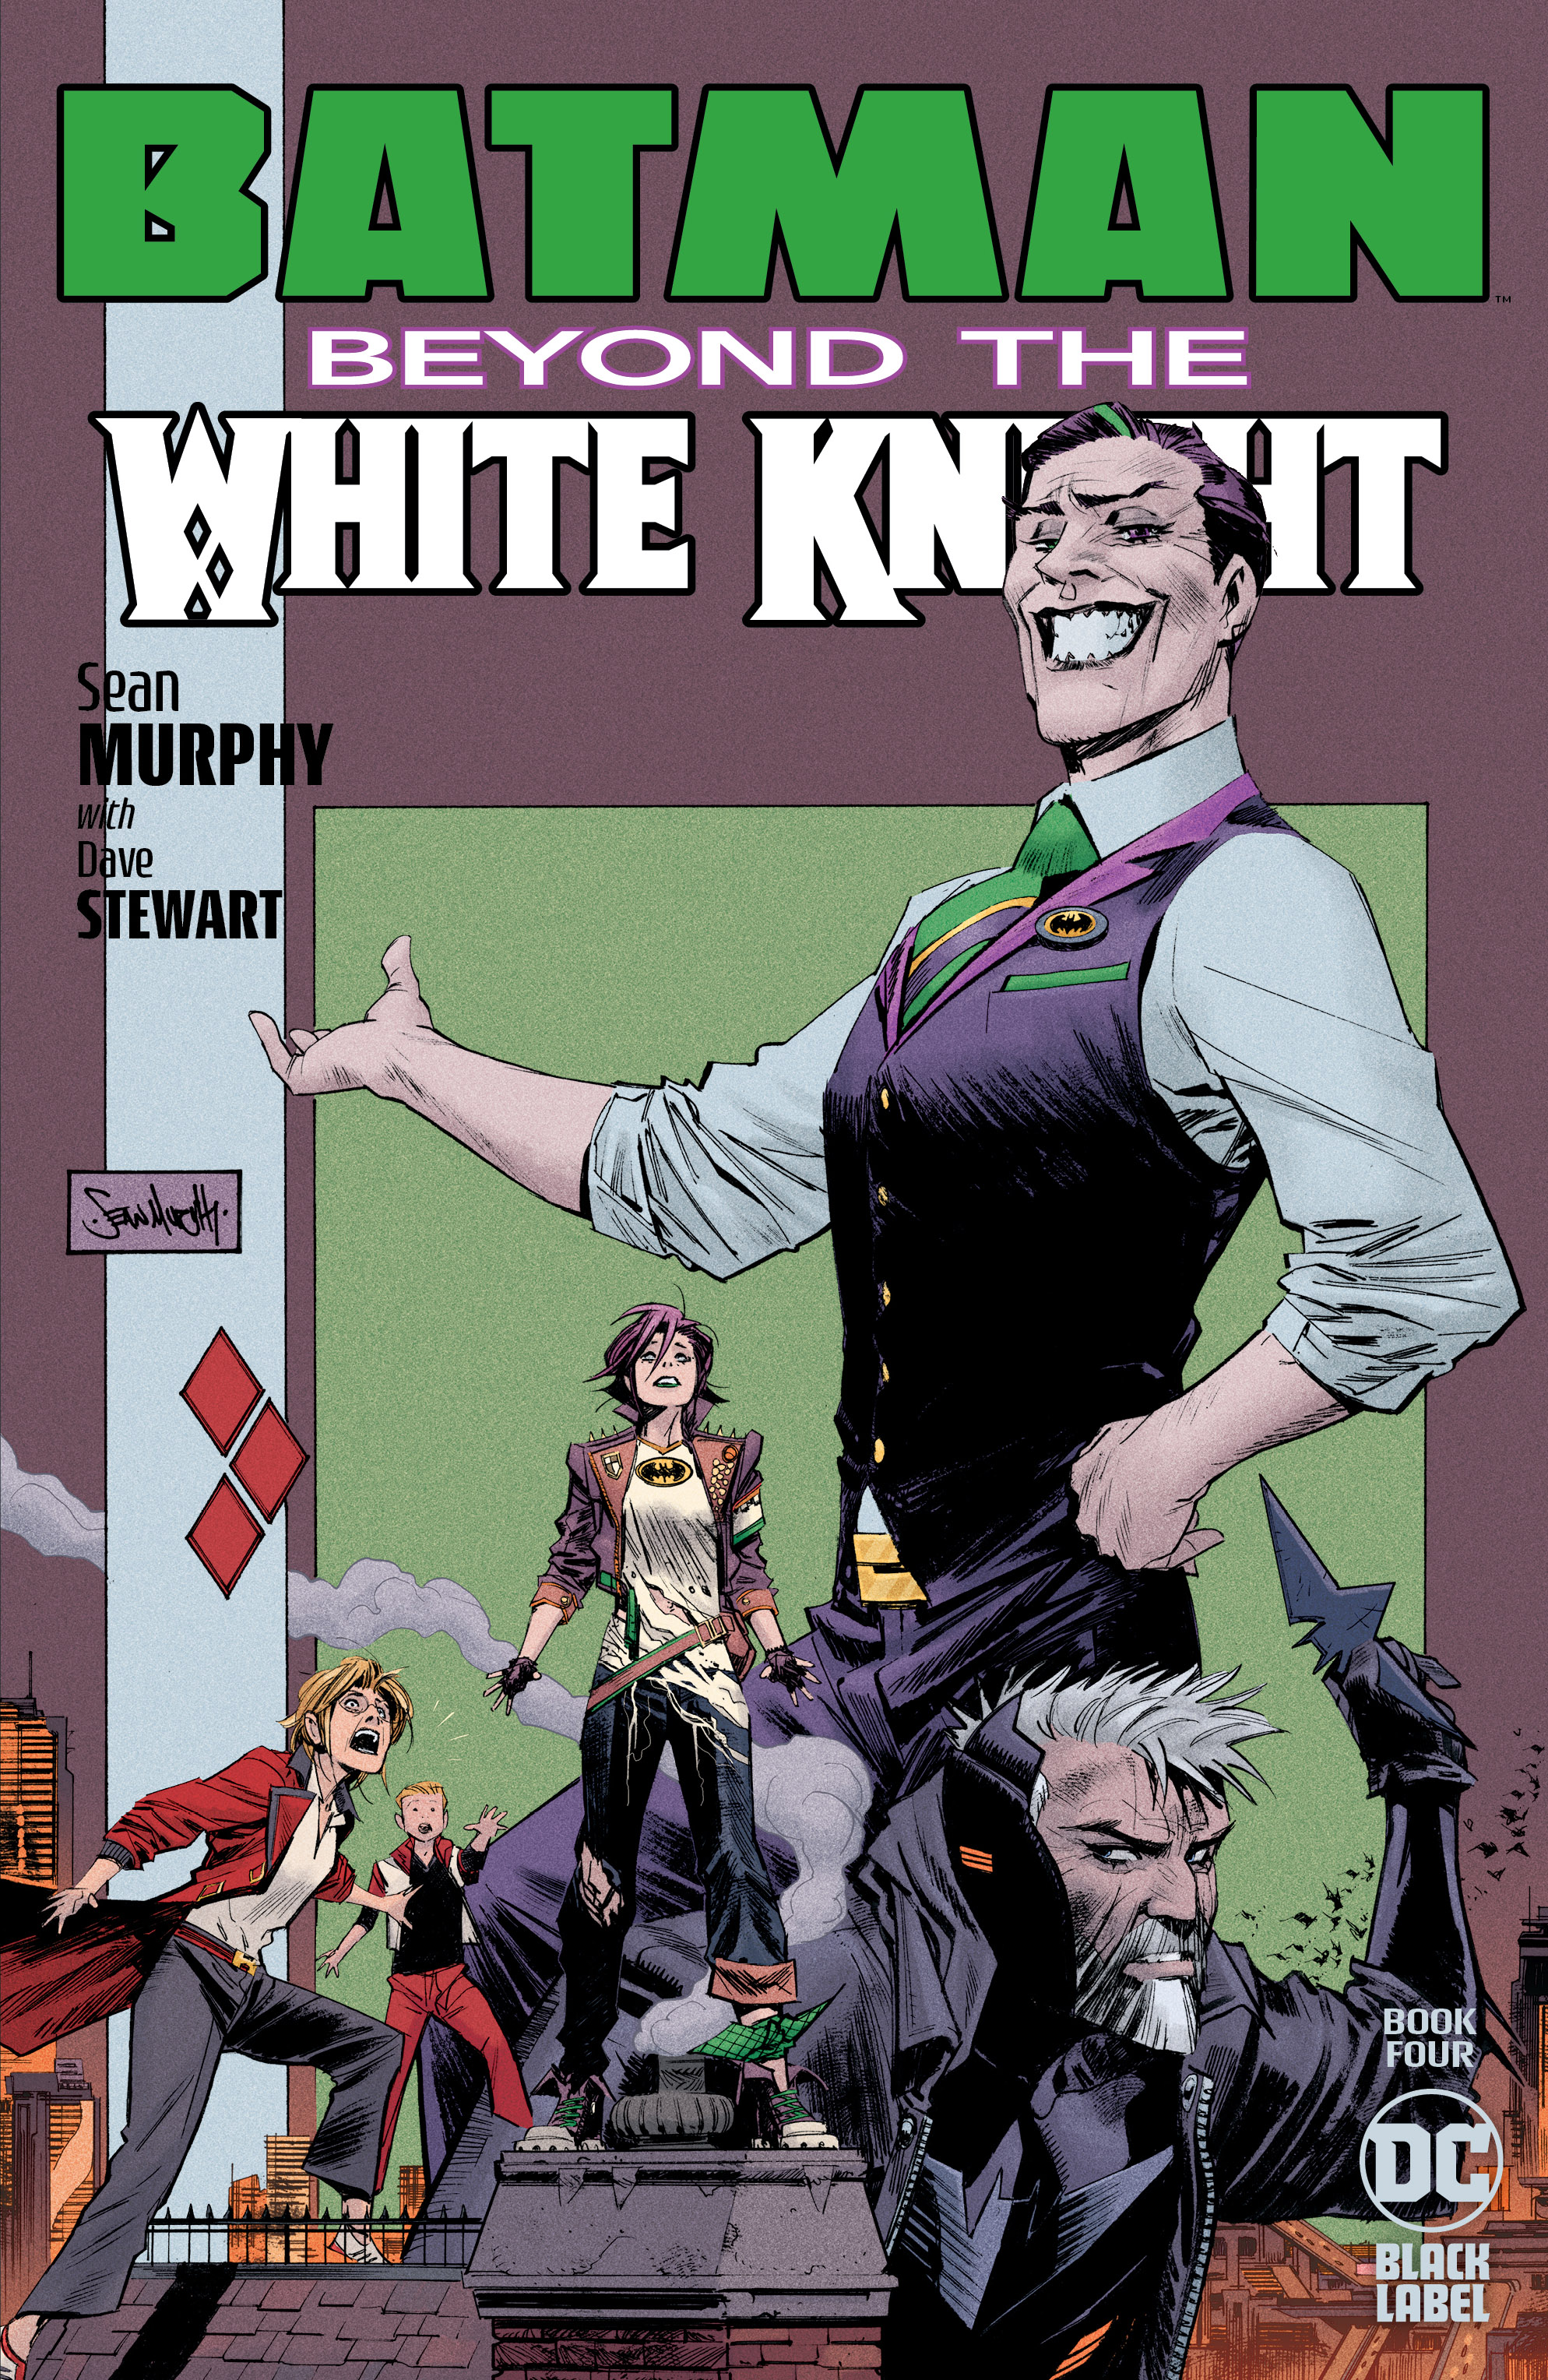 Batman: White Knight #4 cover (art by Sean Murphy) : r/comicbooks